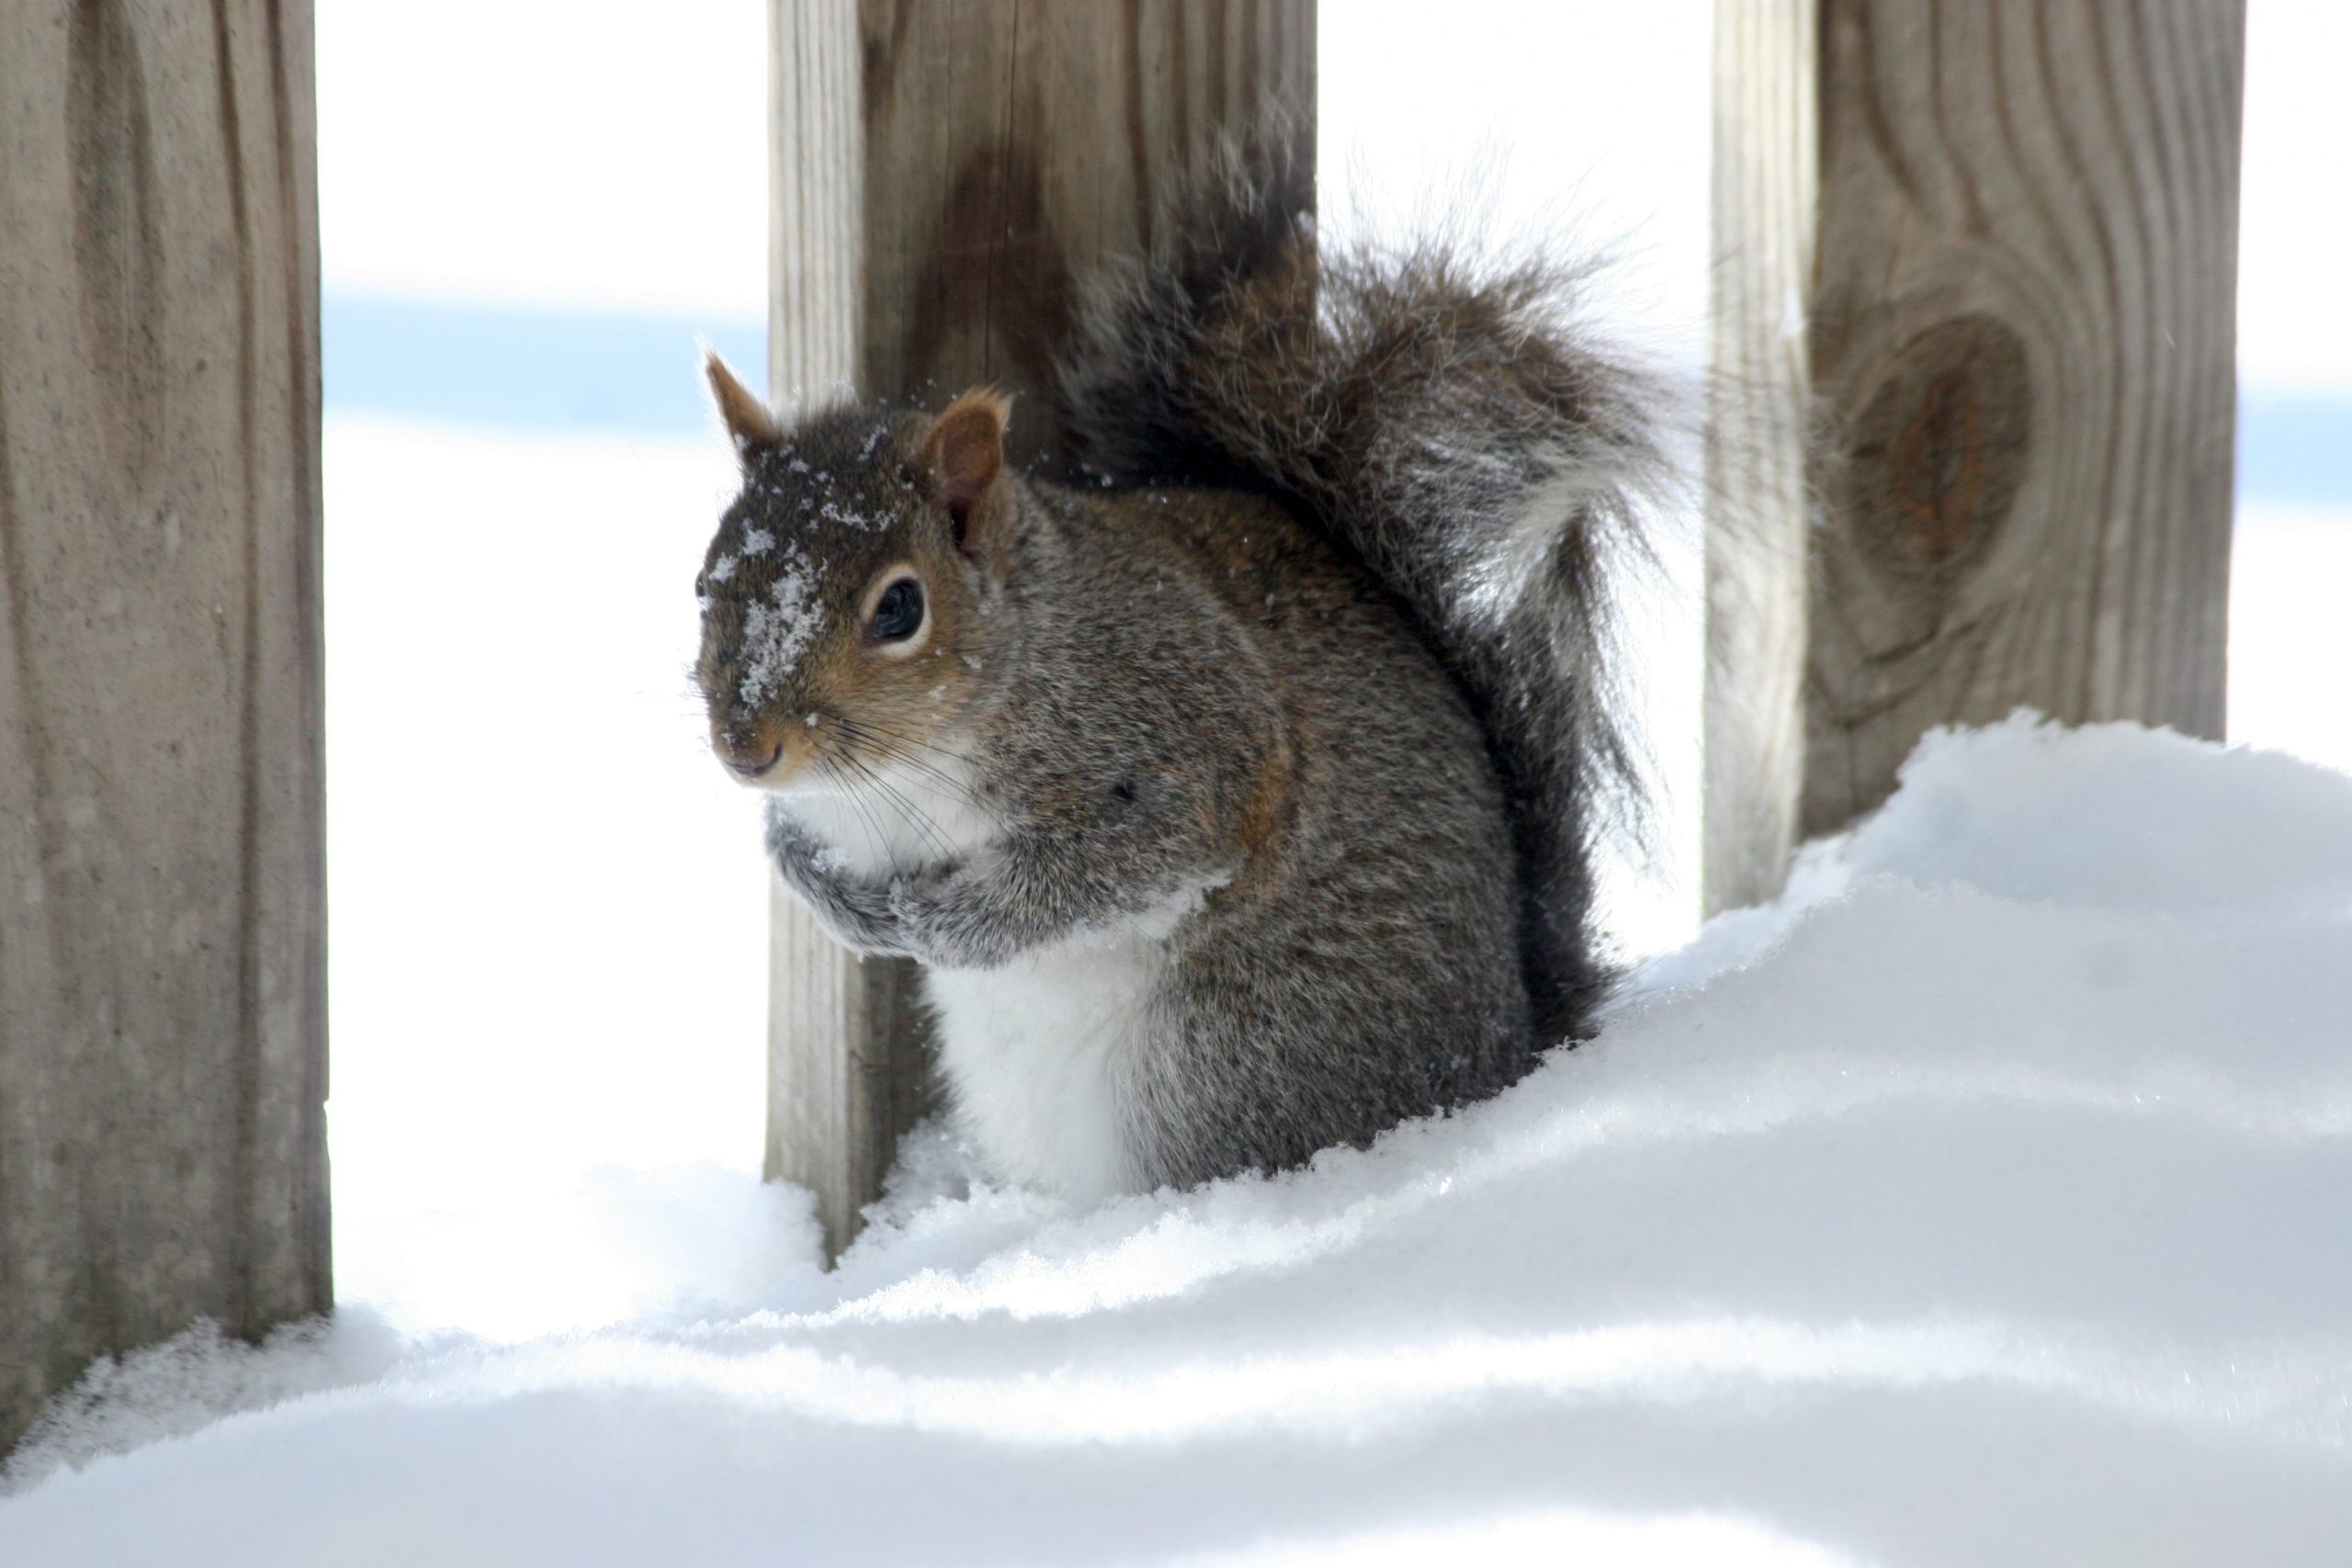 squirrels hibernate in winter